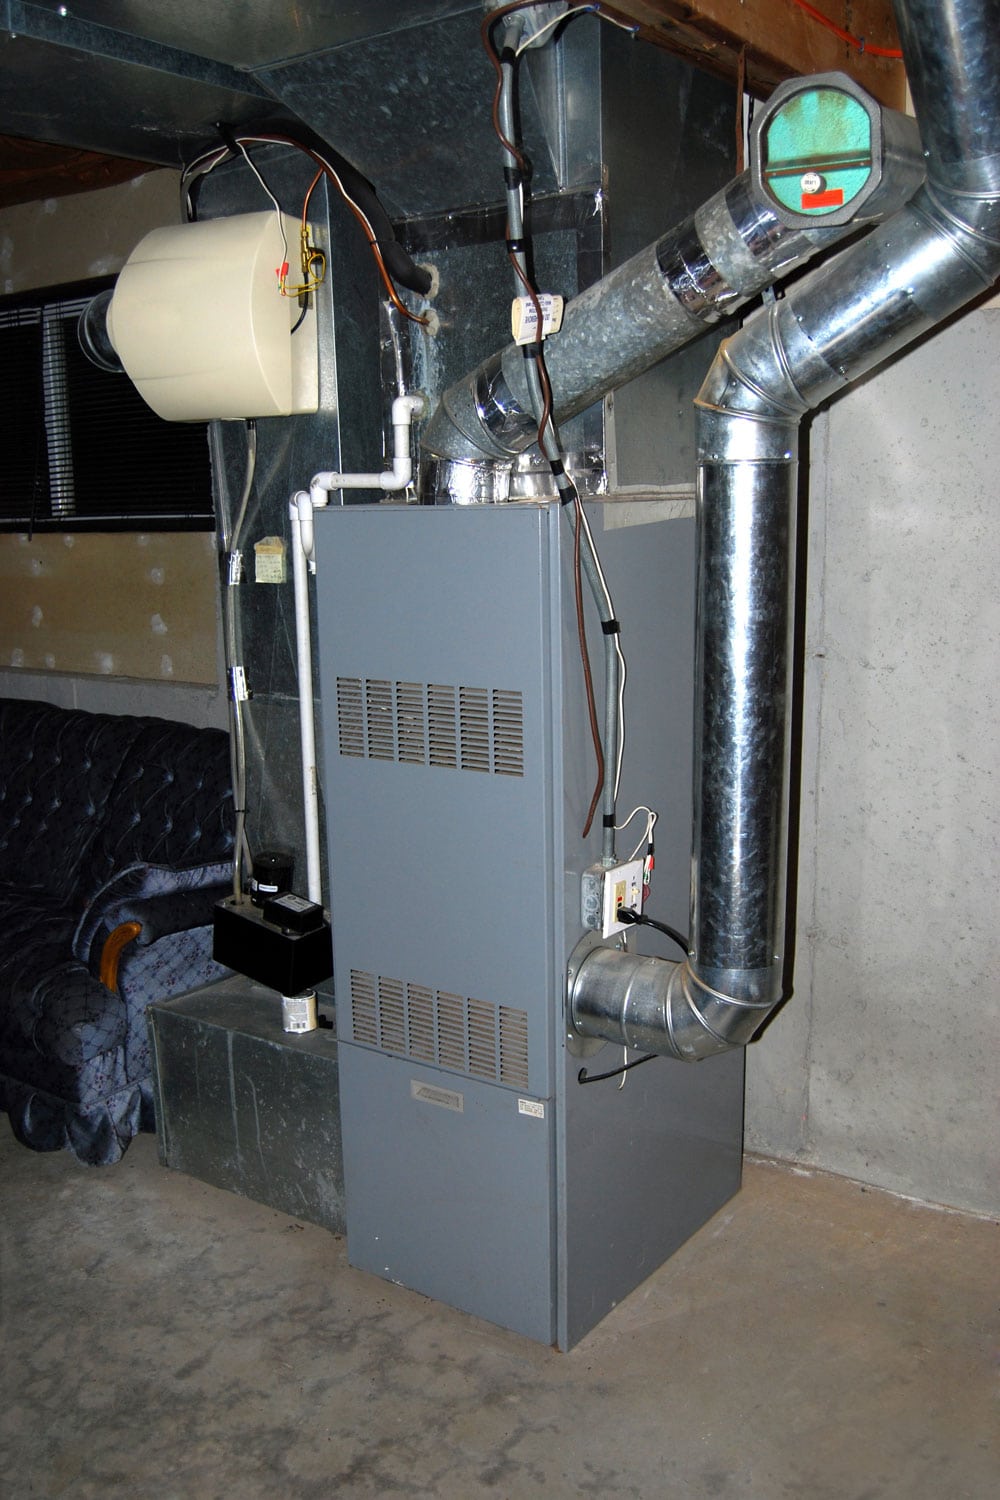 A gray furnace inside the basement